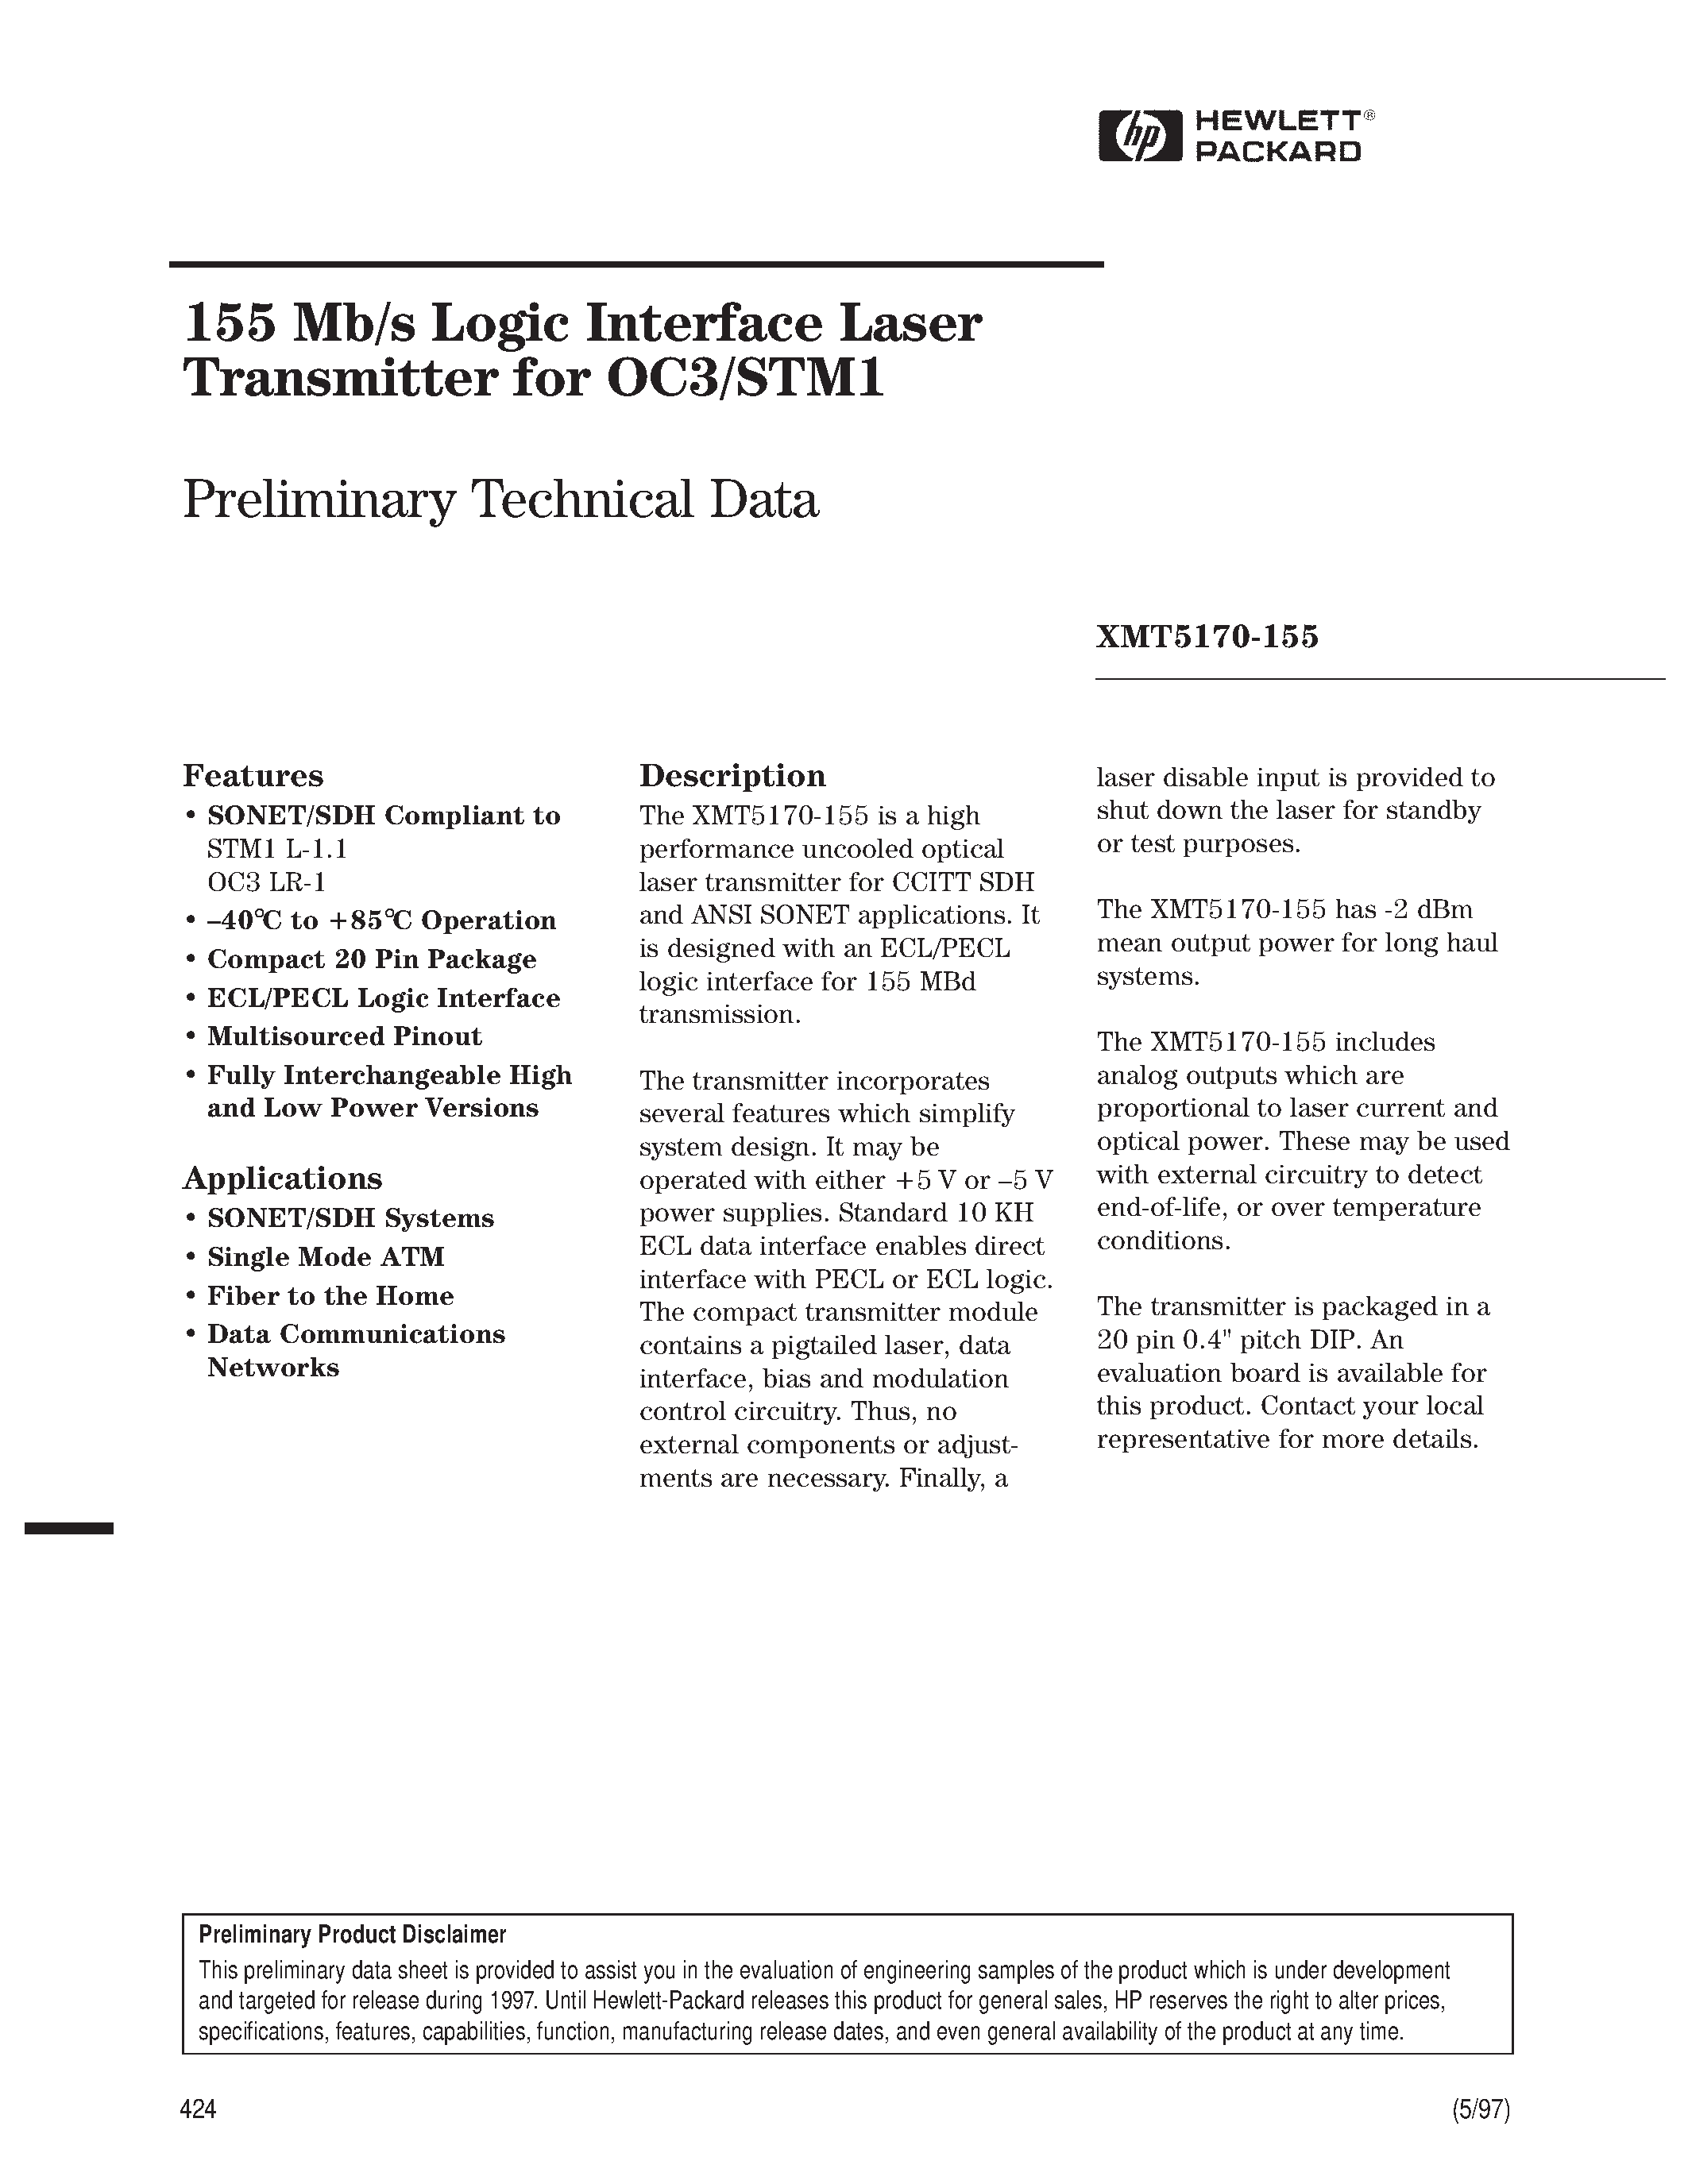 Datasheet XMT5170A-155-SC - 155 Mb/s Logic Interface Laser Transmitter for OC3/STM1 page 1